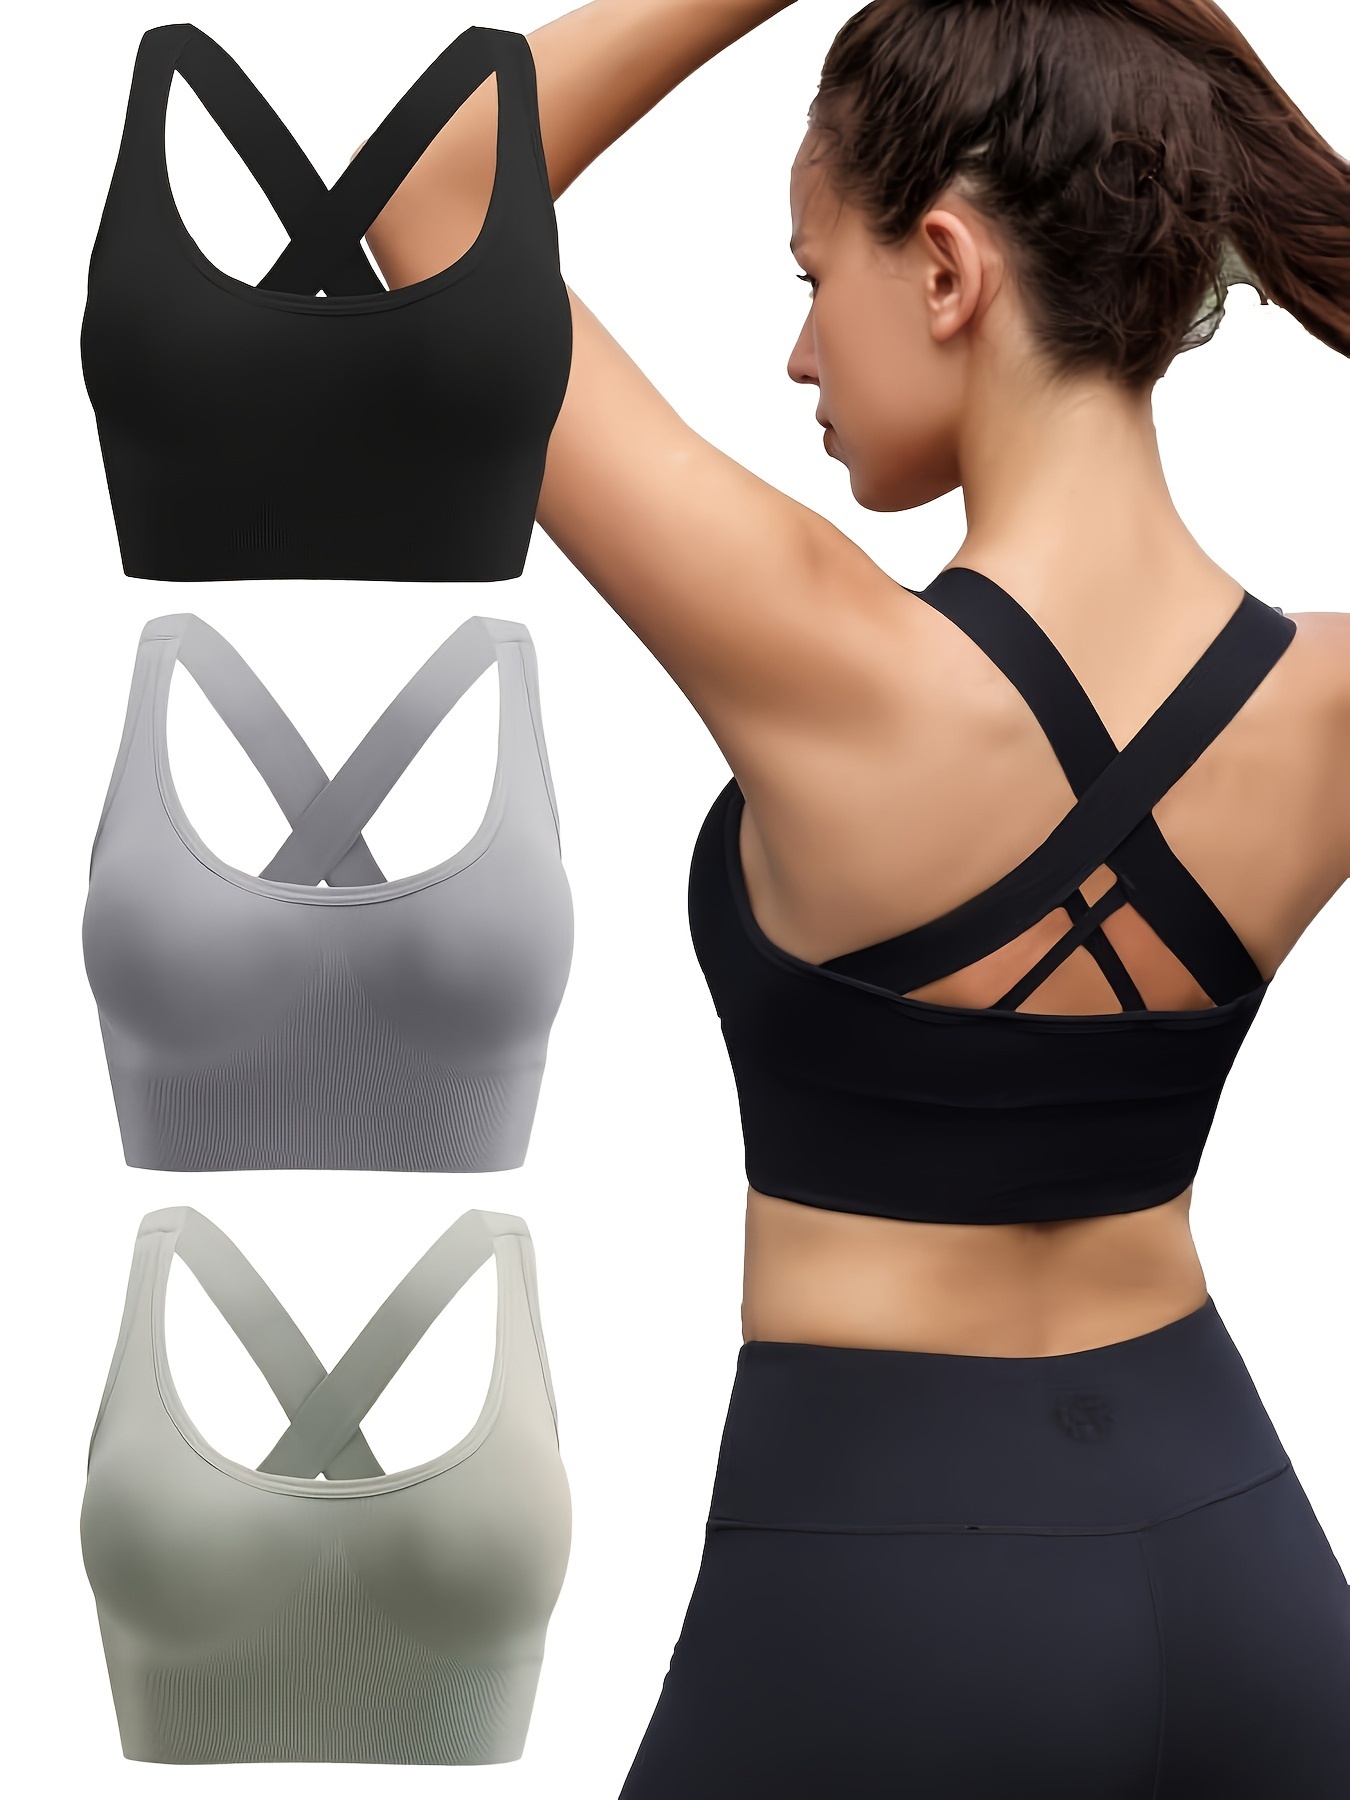 3pcs Zipper Sports Bras, Breathable High Impact Criss Cross Back Bra,  Women's Lingerie & Underwear